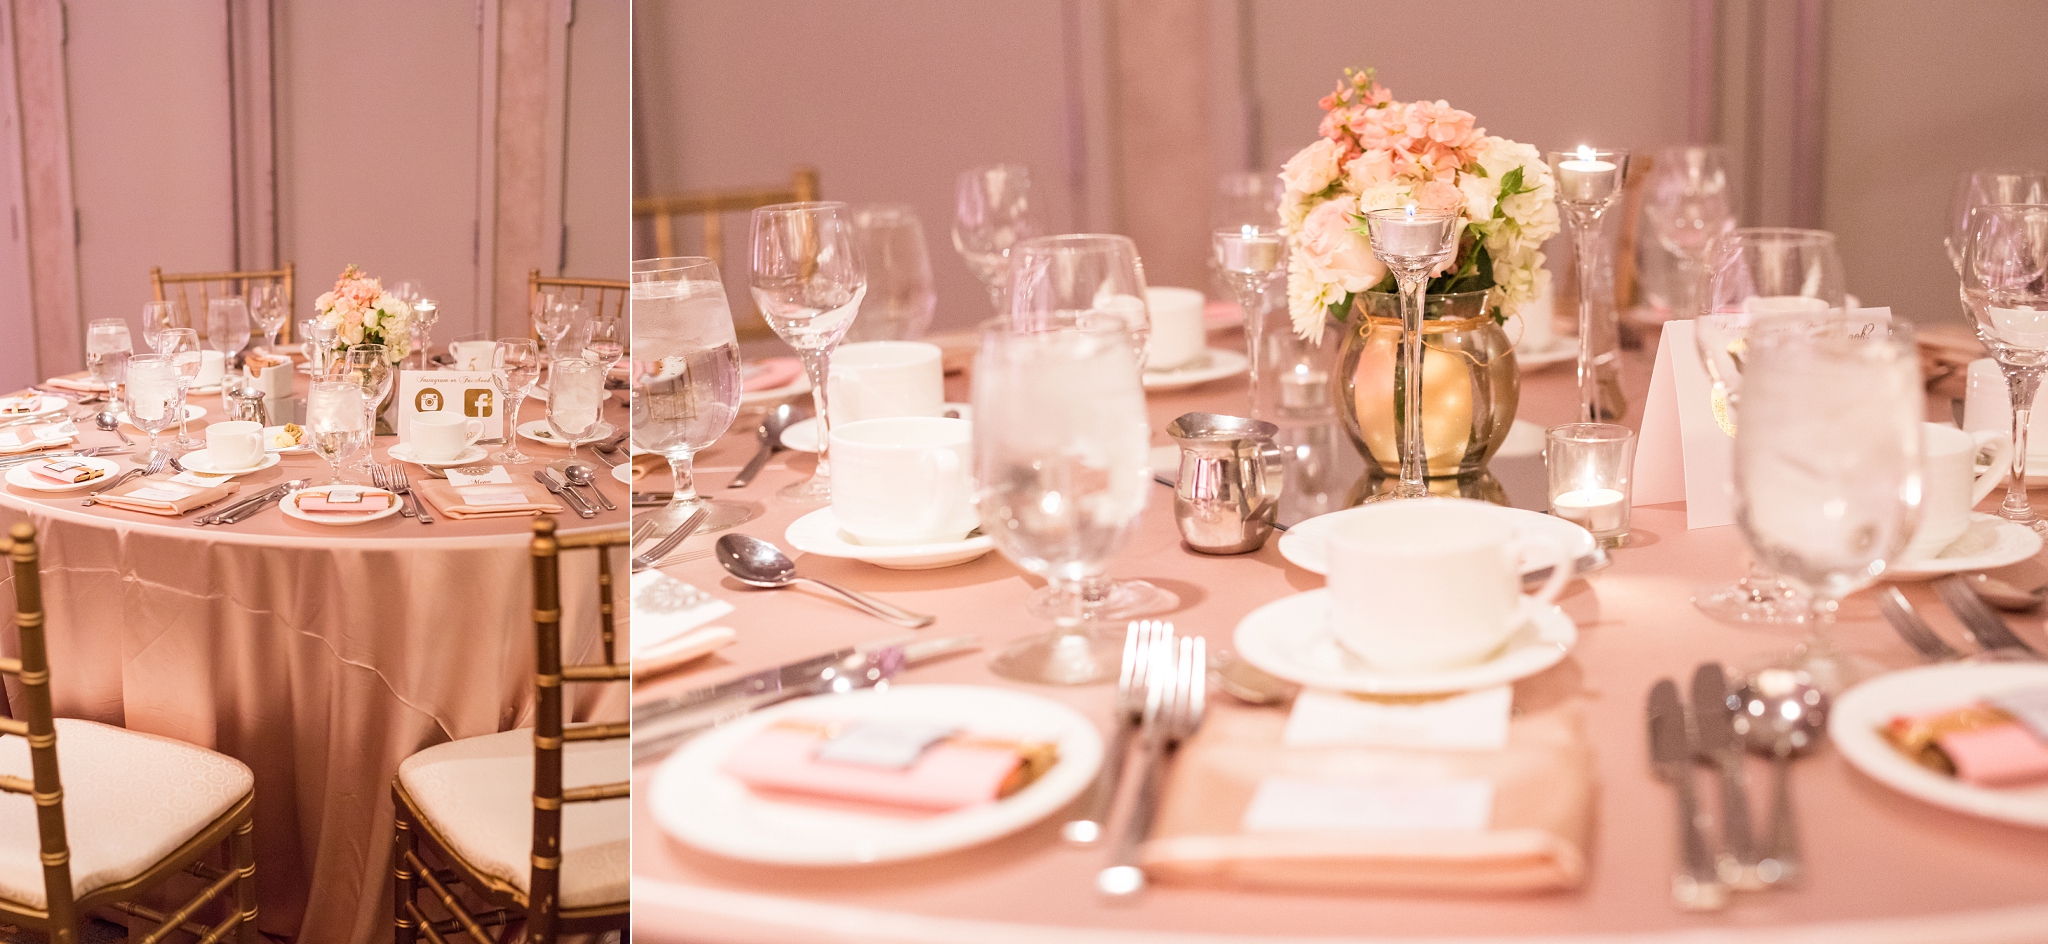 matrix hotel edmonton wedding photos blush and gold wedding decor chiavari chairs